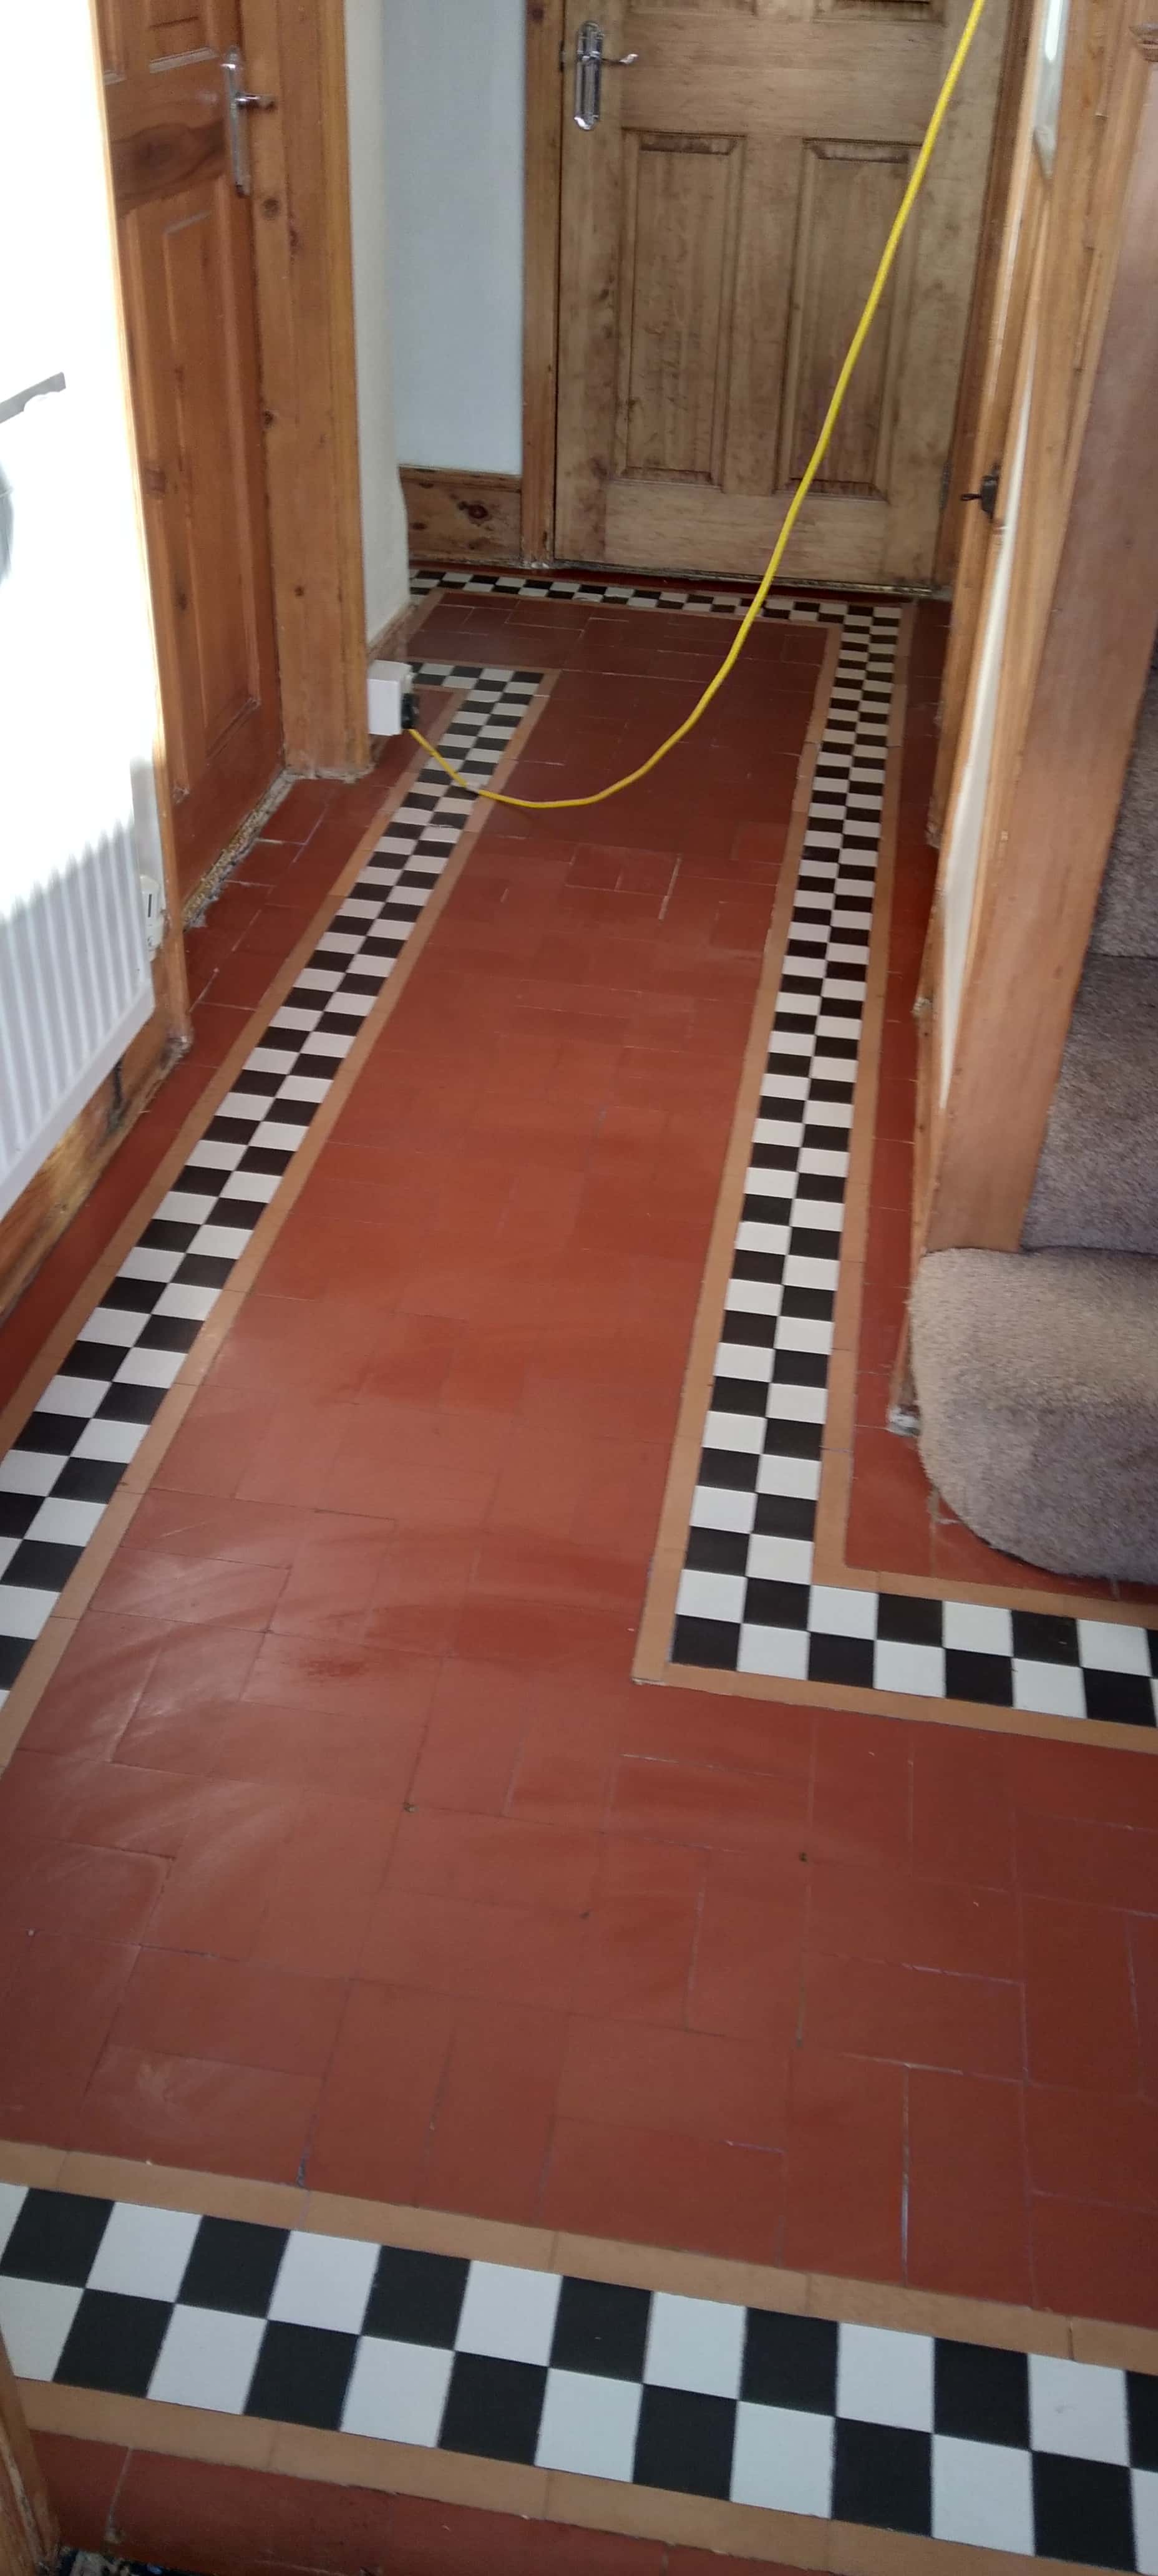 Edwardian Tiled Hallway Floor After Restoration Dursley